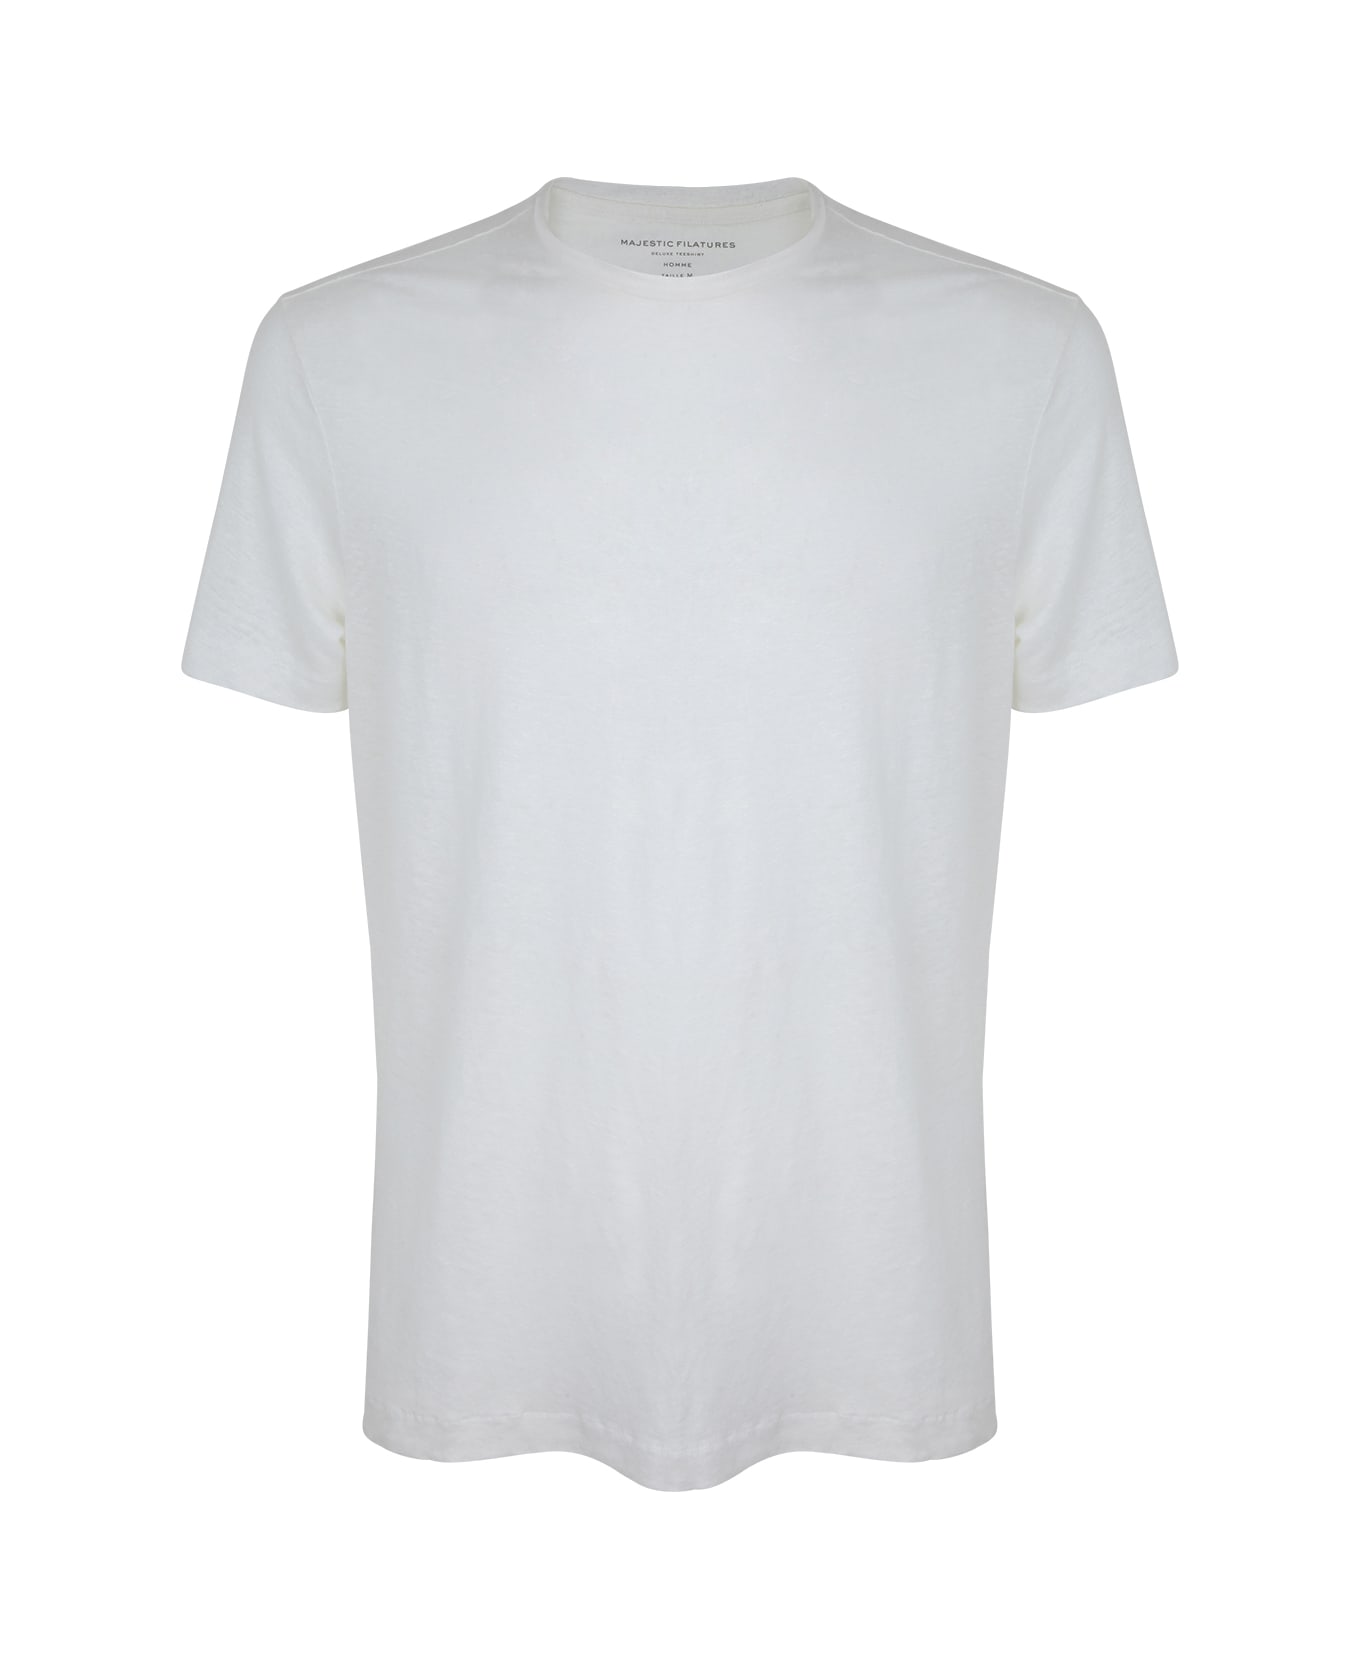 Majestic Filatures Short Sleeves Crew Neck T-shirt - White シャツ